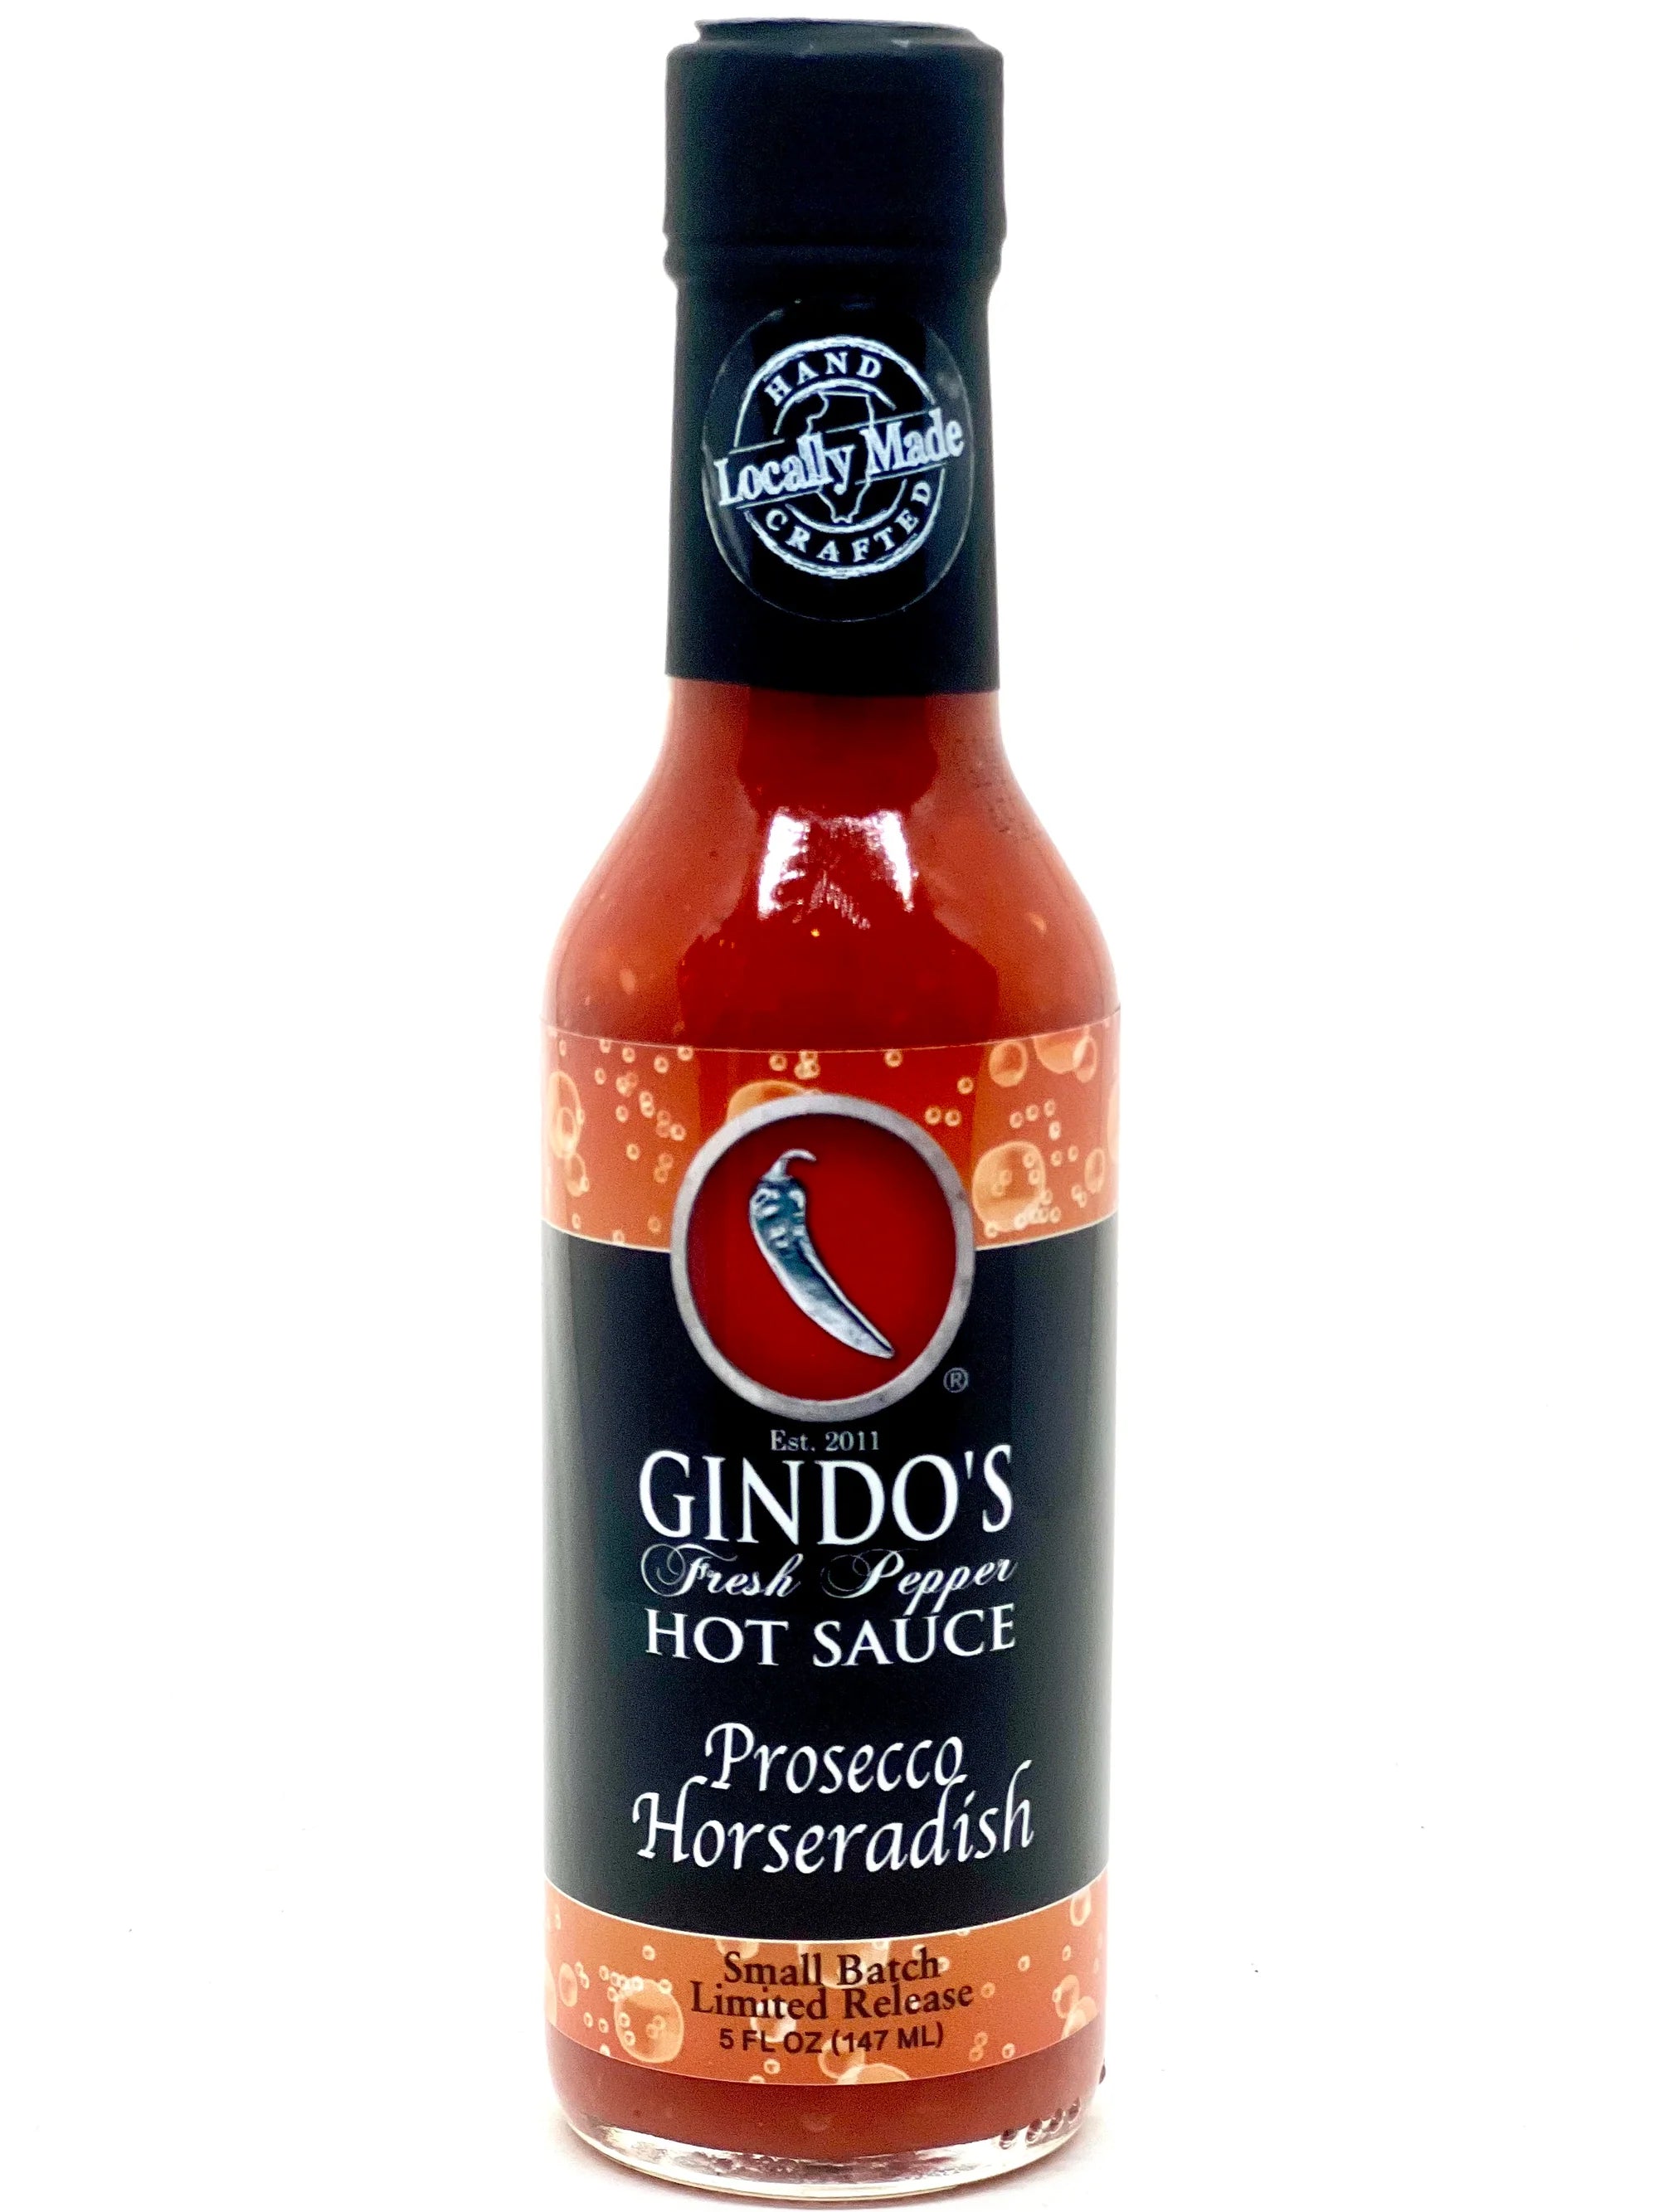 Gindo's Prosecco Horseradish Hot Sauce